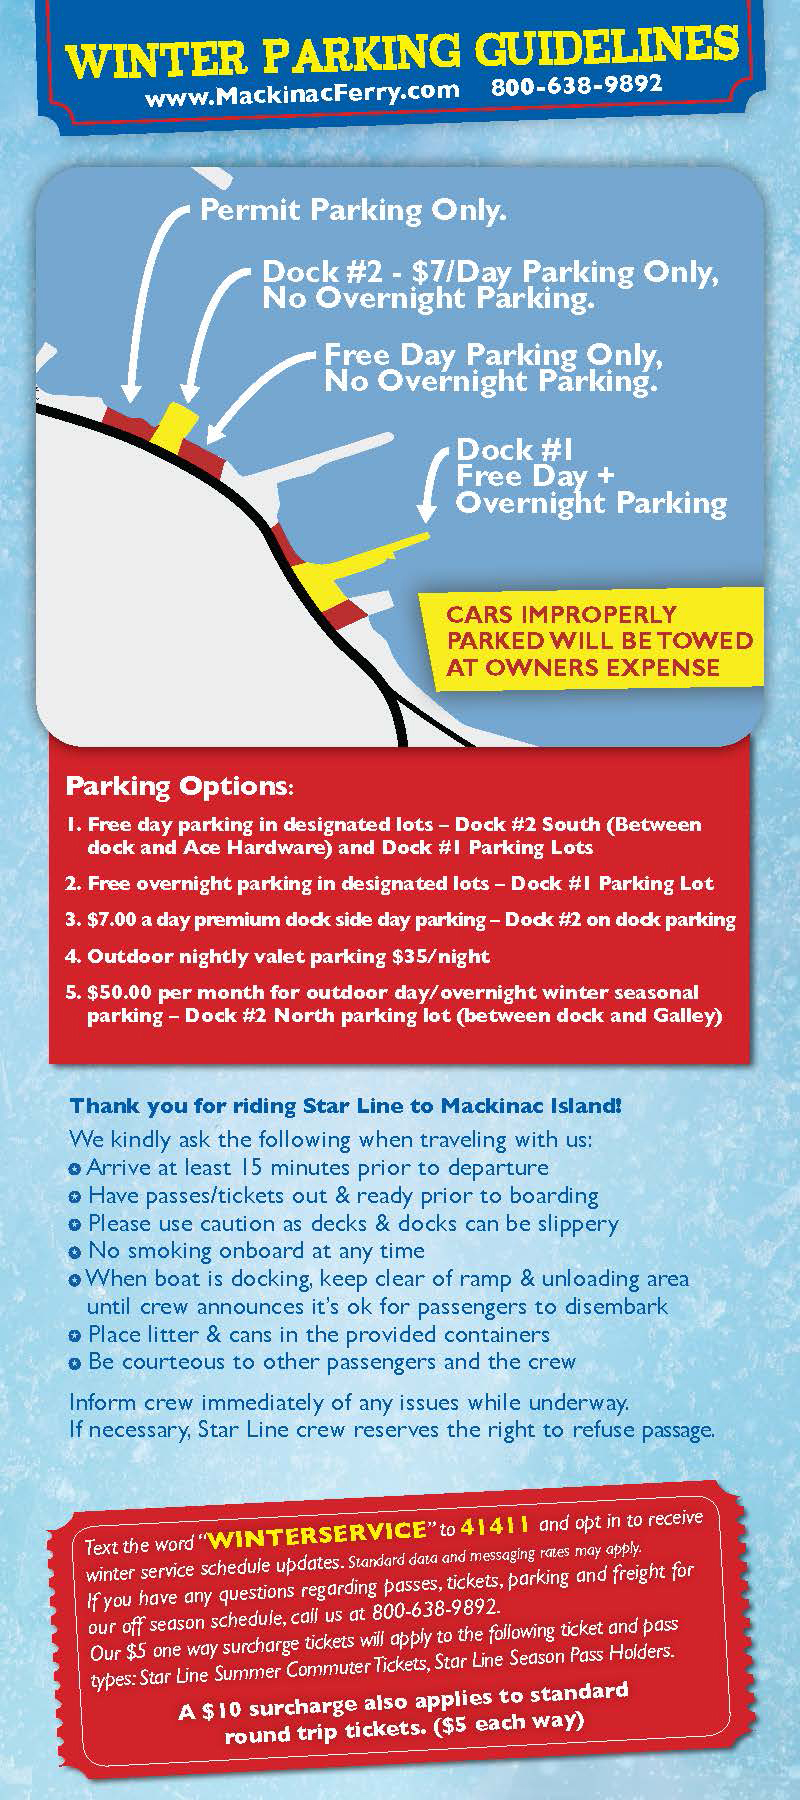 Star Line Mackinac Island Ferry Parking Information